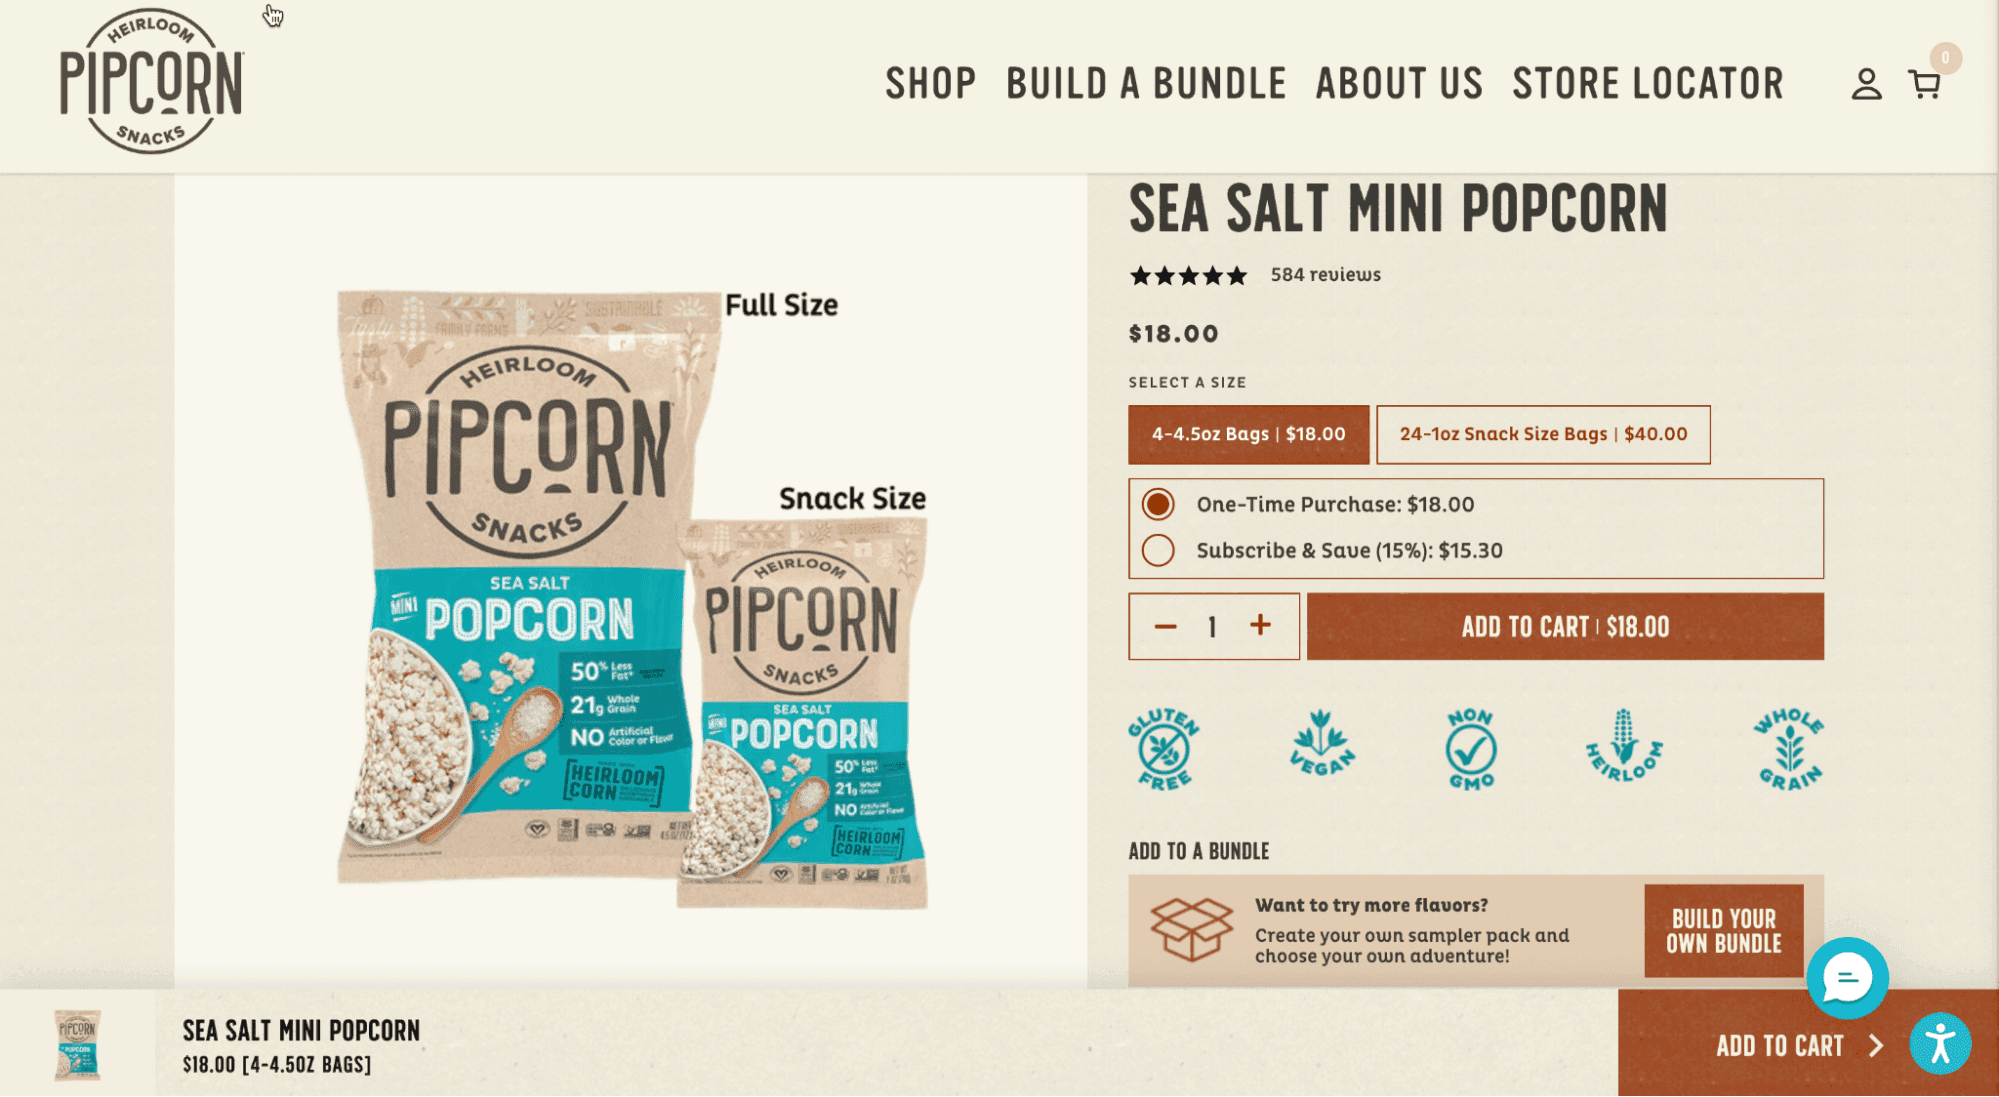 Sea salt mini popcorn product page from Pipcorn